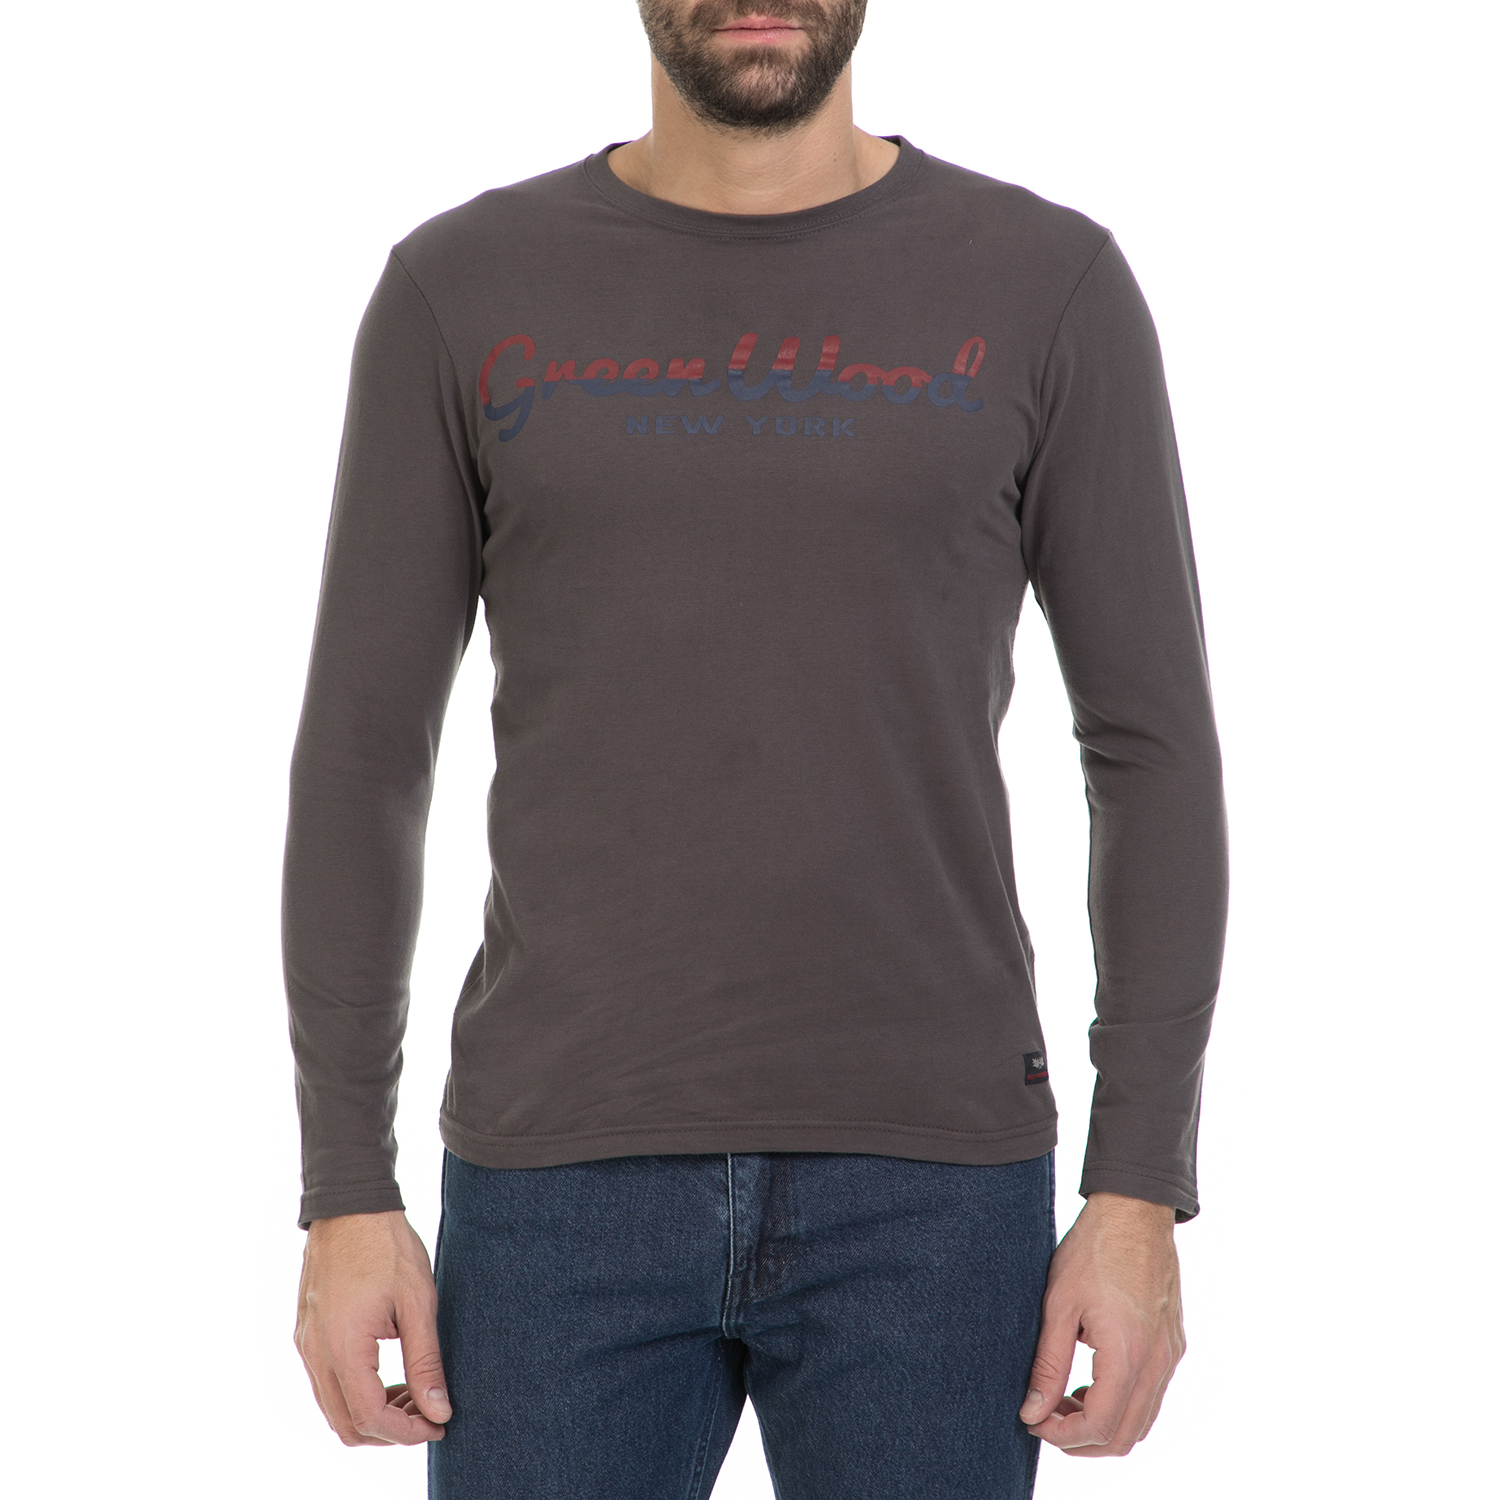 GREENWOOD - Ανδρική μπλούζα GREENWOOD γκρι Ανδρικά/Ρούχα/Μπλούζες/Μακρυμάνικες